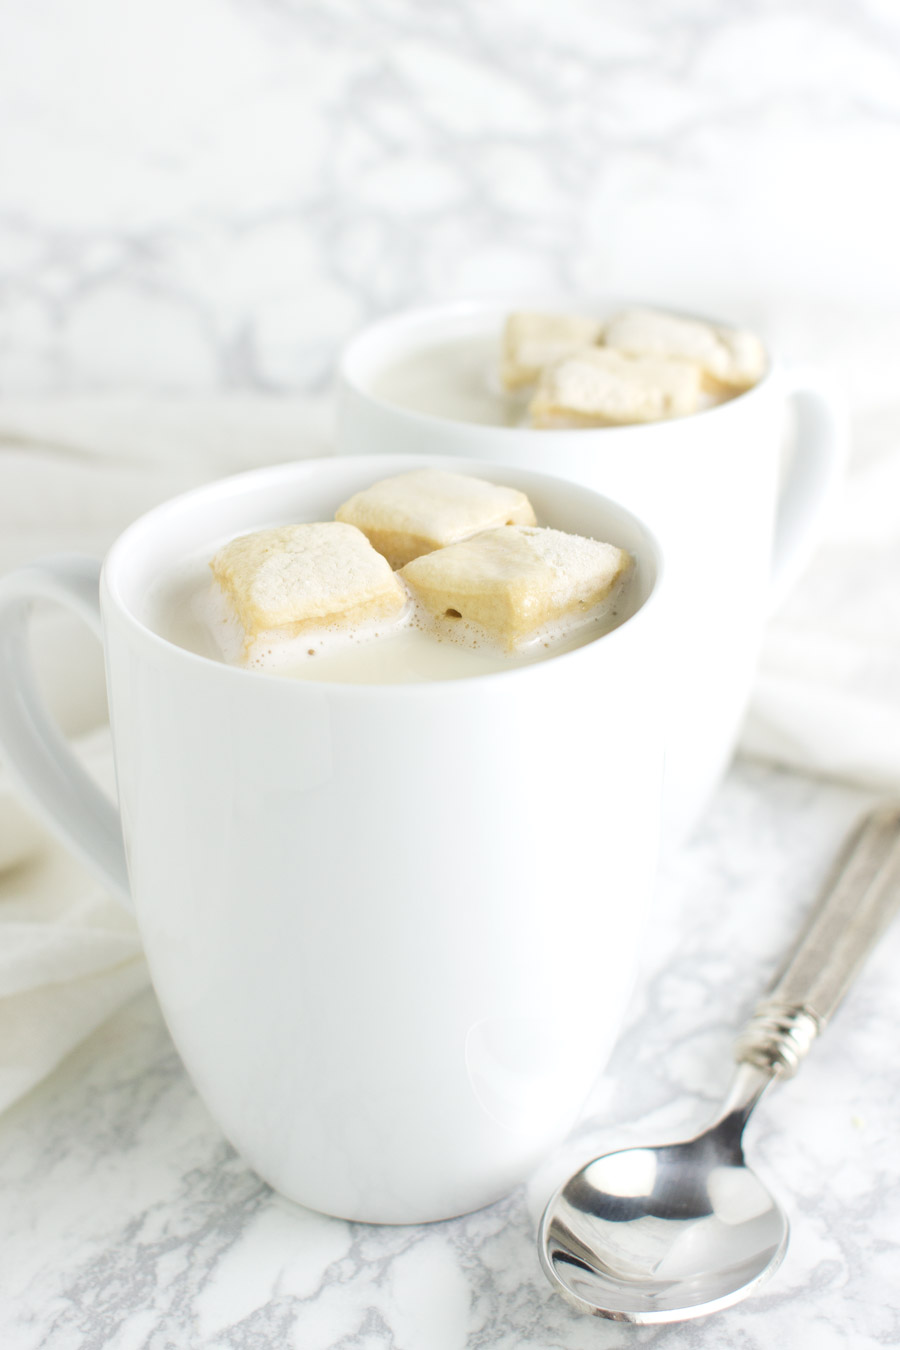 Matcha Green Tea Latte recipe from acleanplate.com #aip #paleo #autoimmuneprotocol